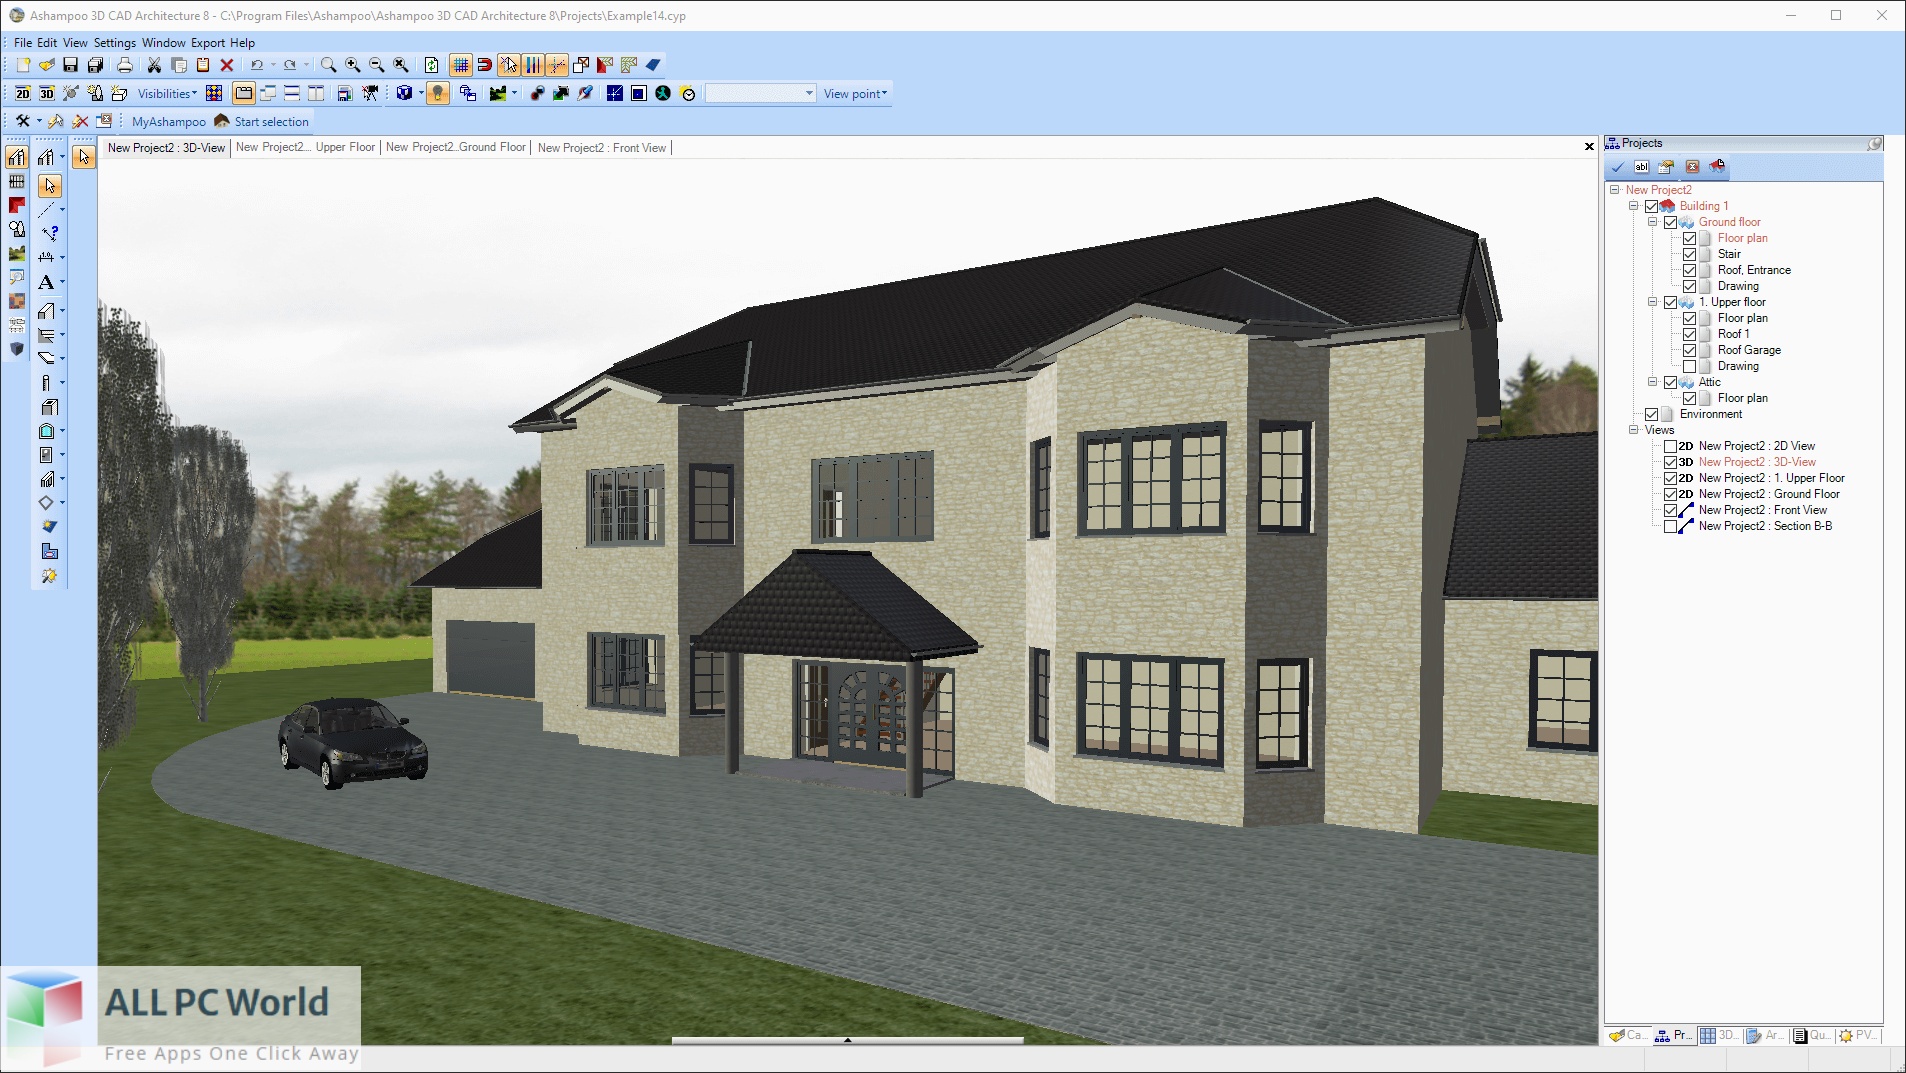 Ashampoo 3D CAD Architecture 8 Free Download